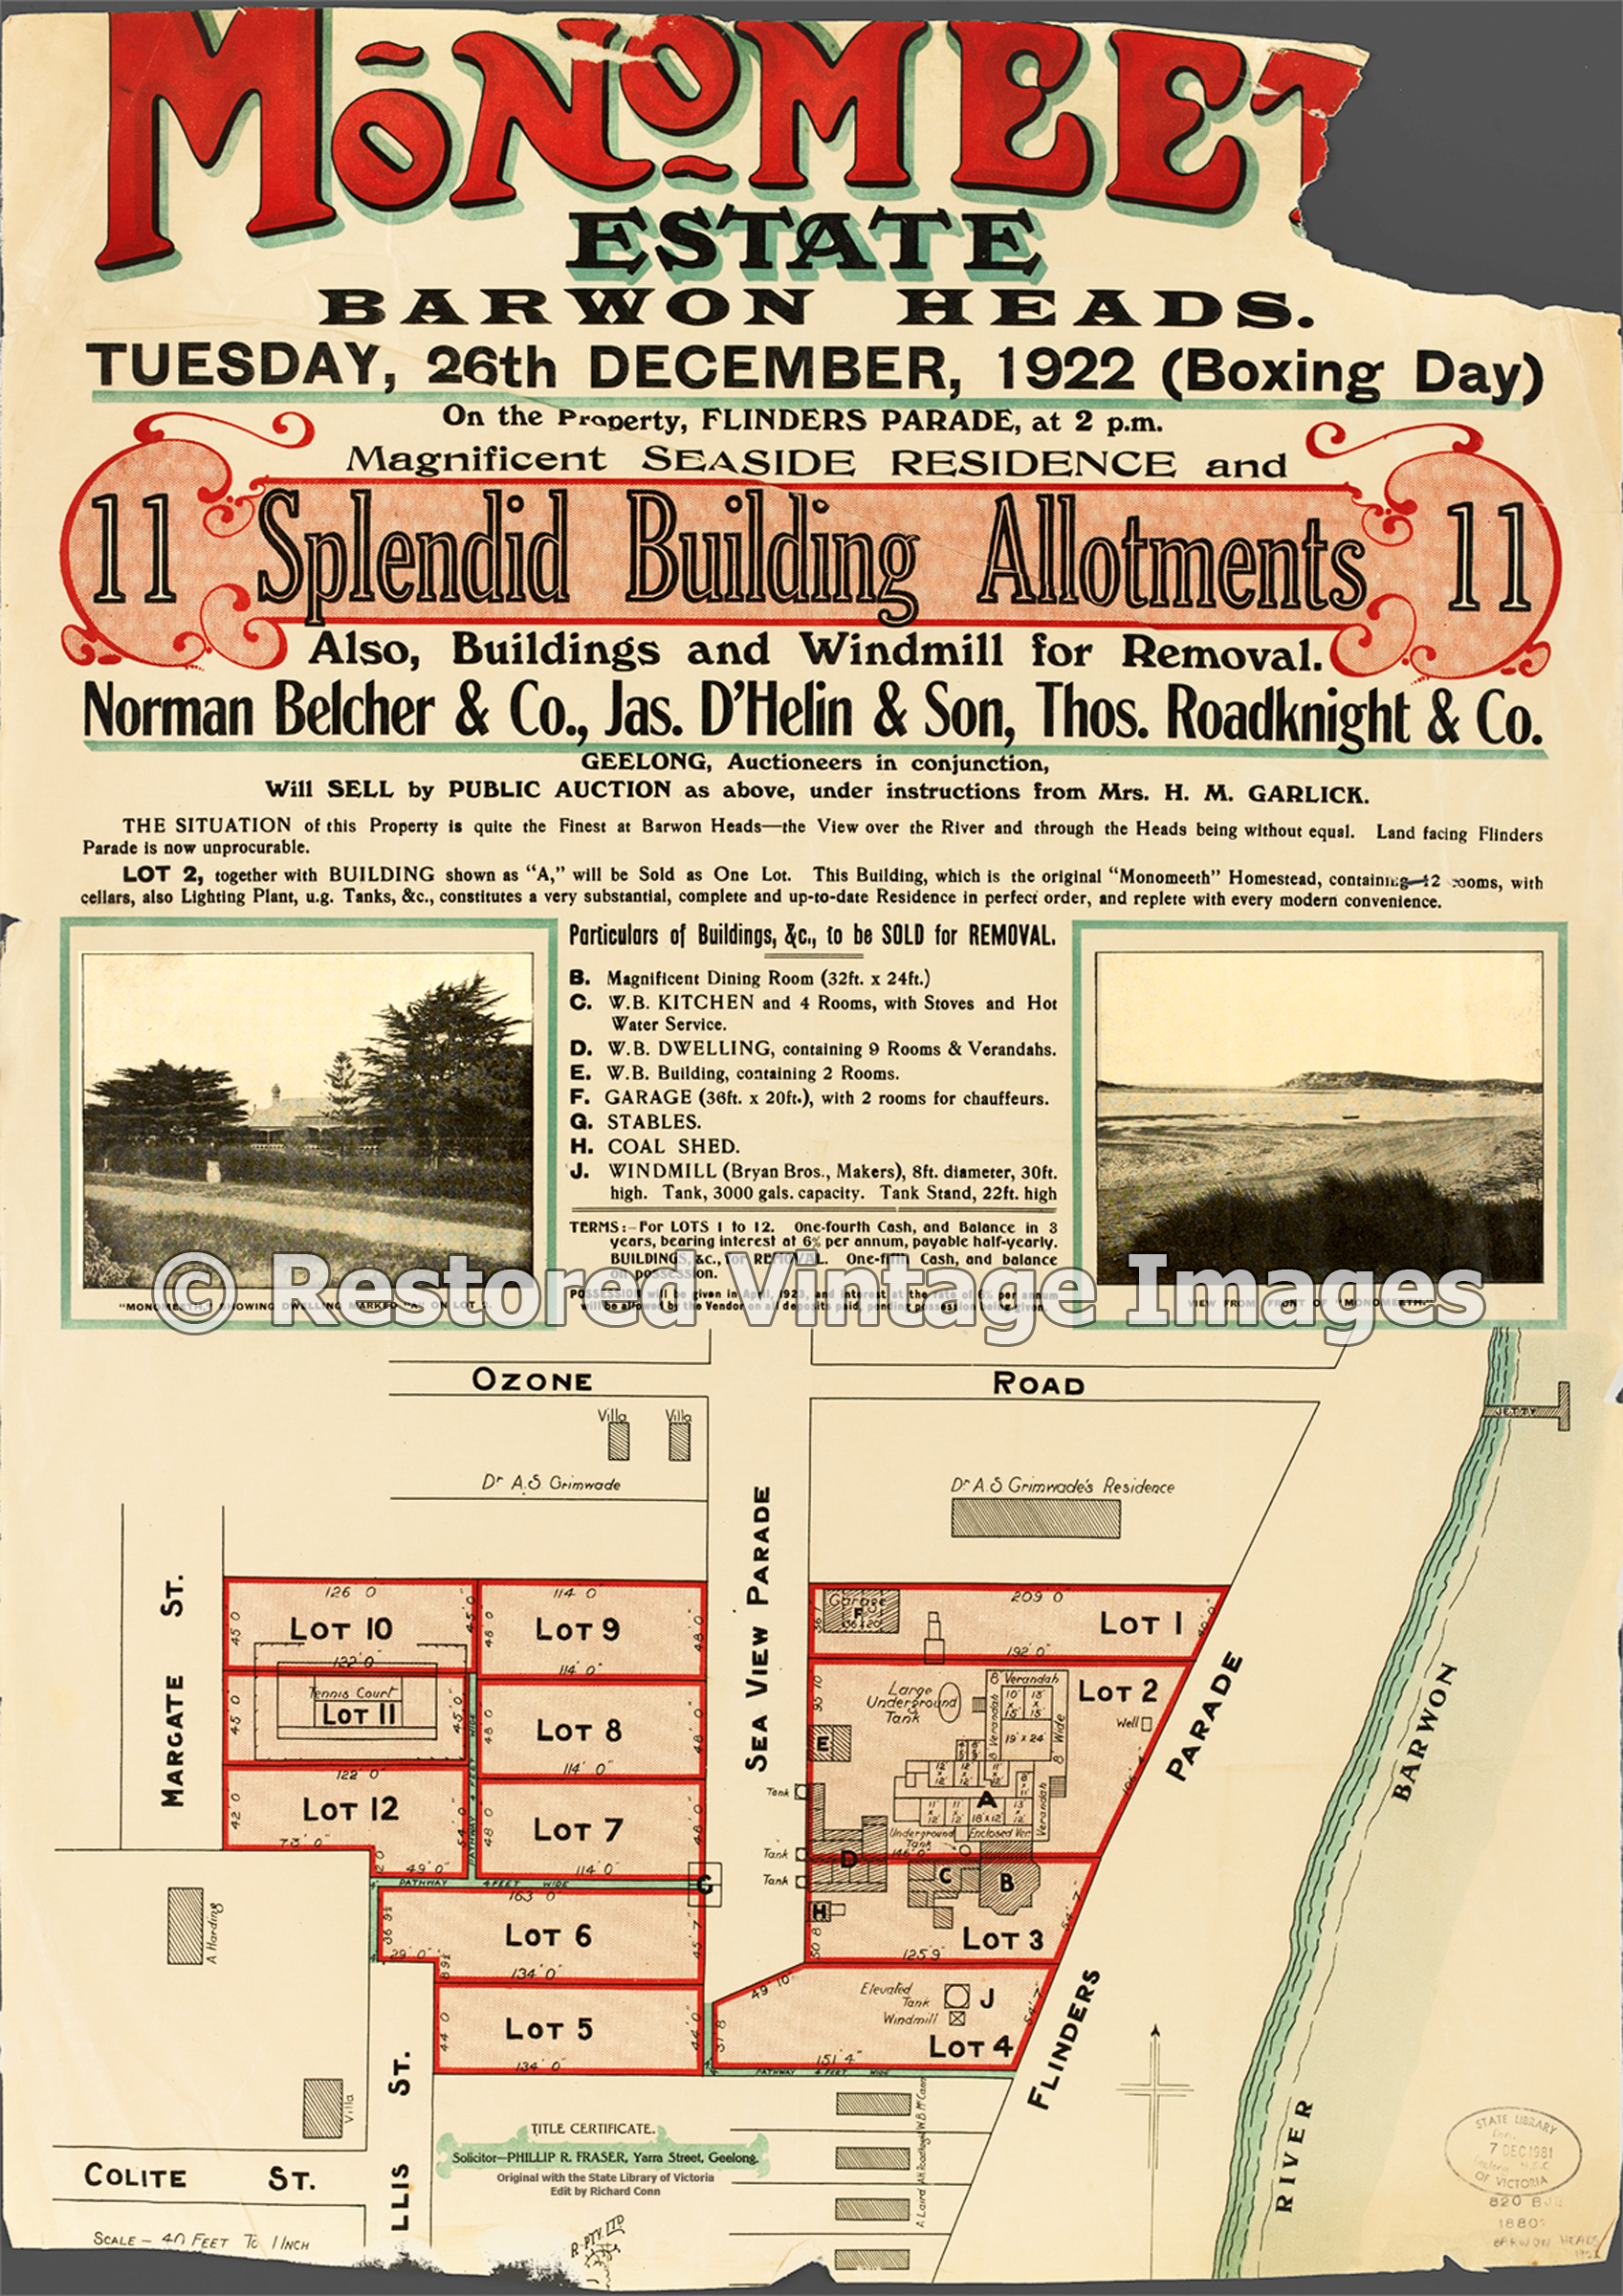 Monomeeth Estate 26th December 1922 – Barwon Heads